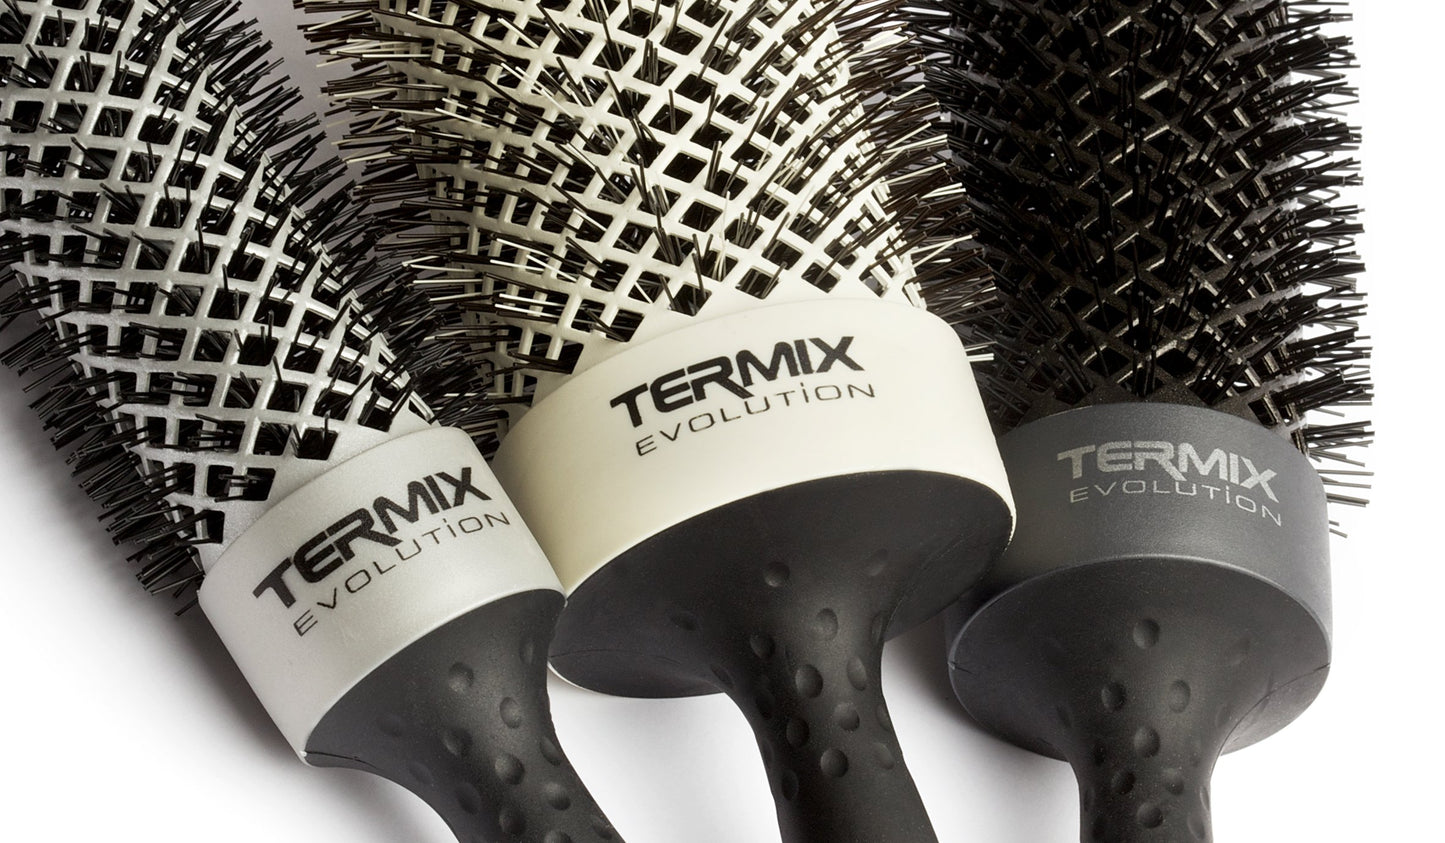 Termix Evolution Styling Brush 23mm SOFT for Fine Hair